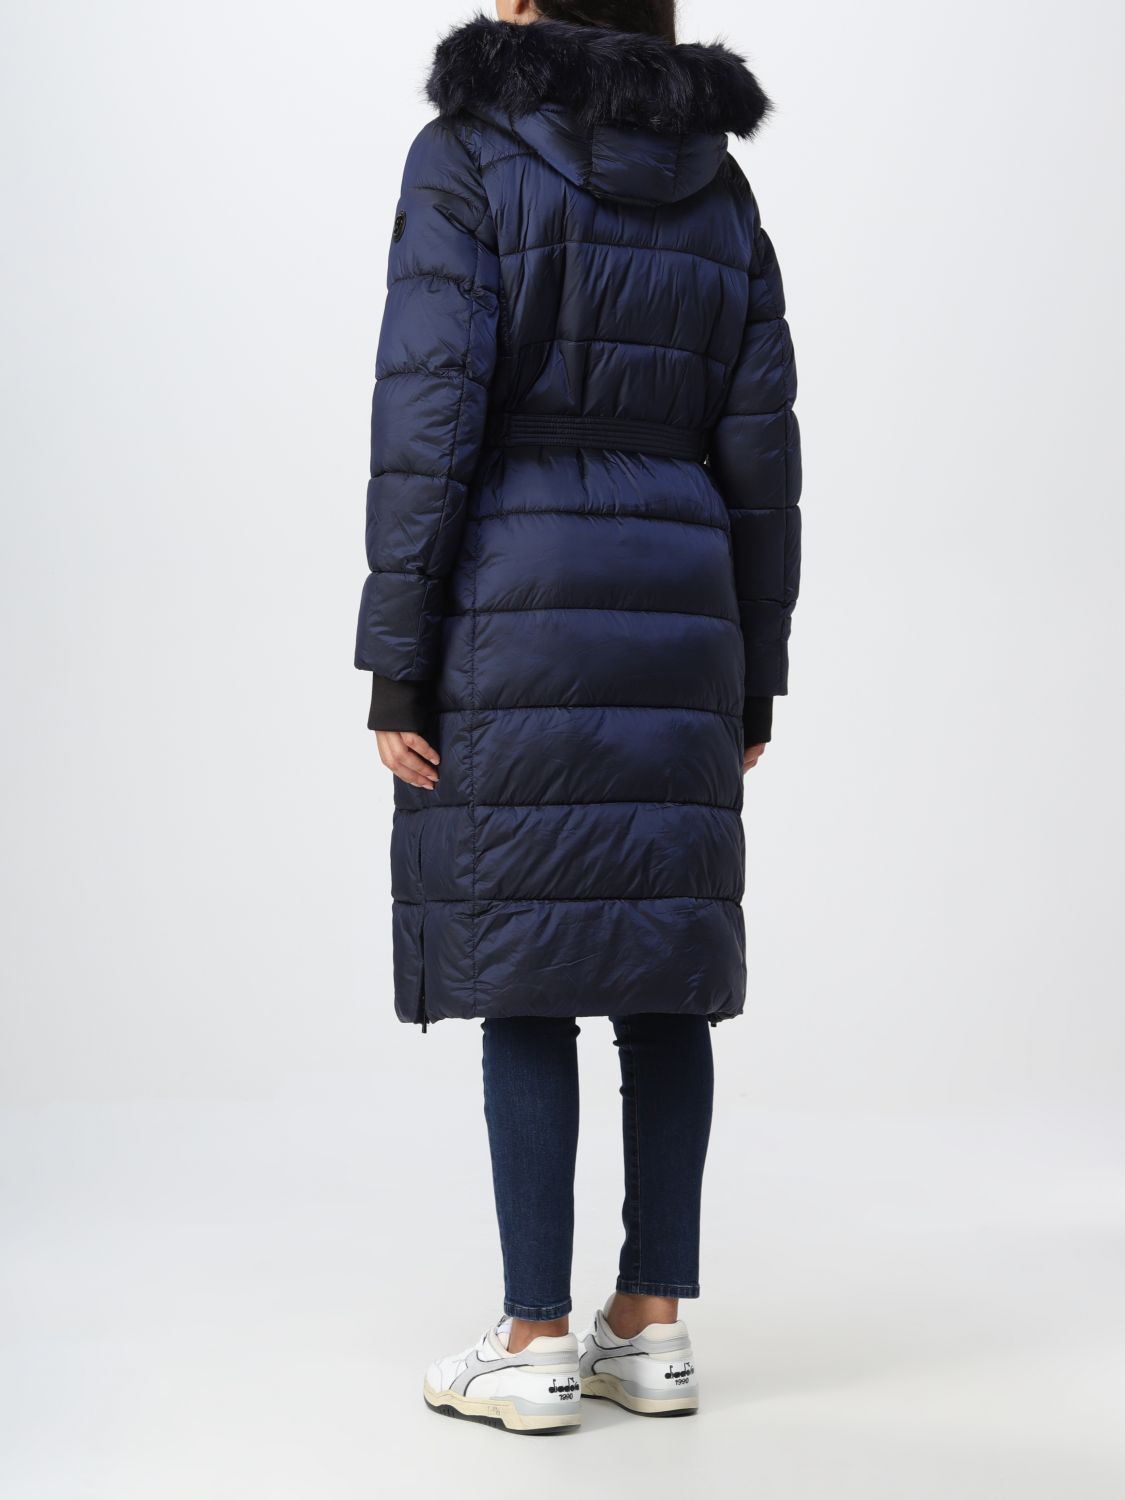 MICHAEL KORS: jacket for woman - Blue | Michael Kors jacket 77Q5741M41  online on 